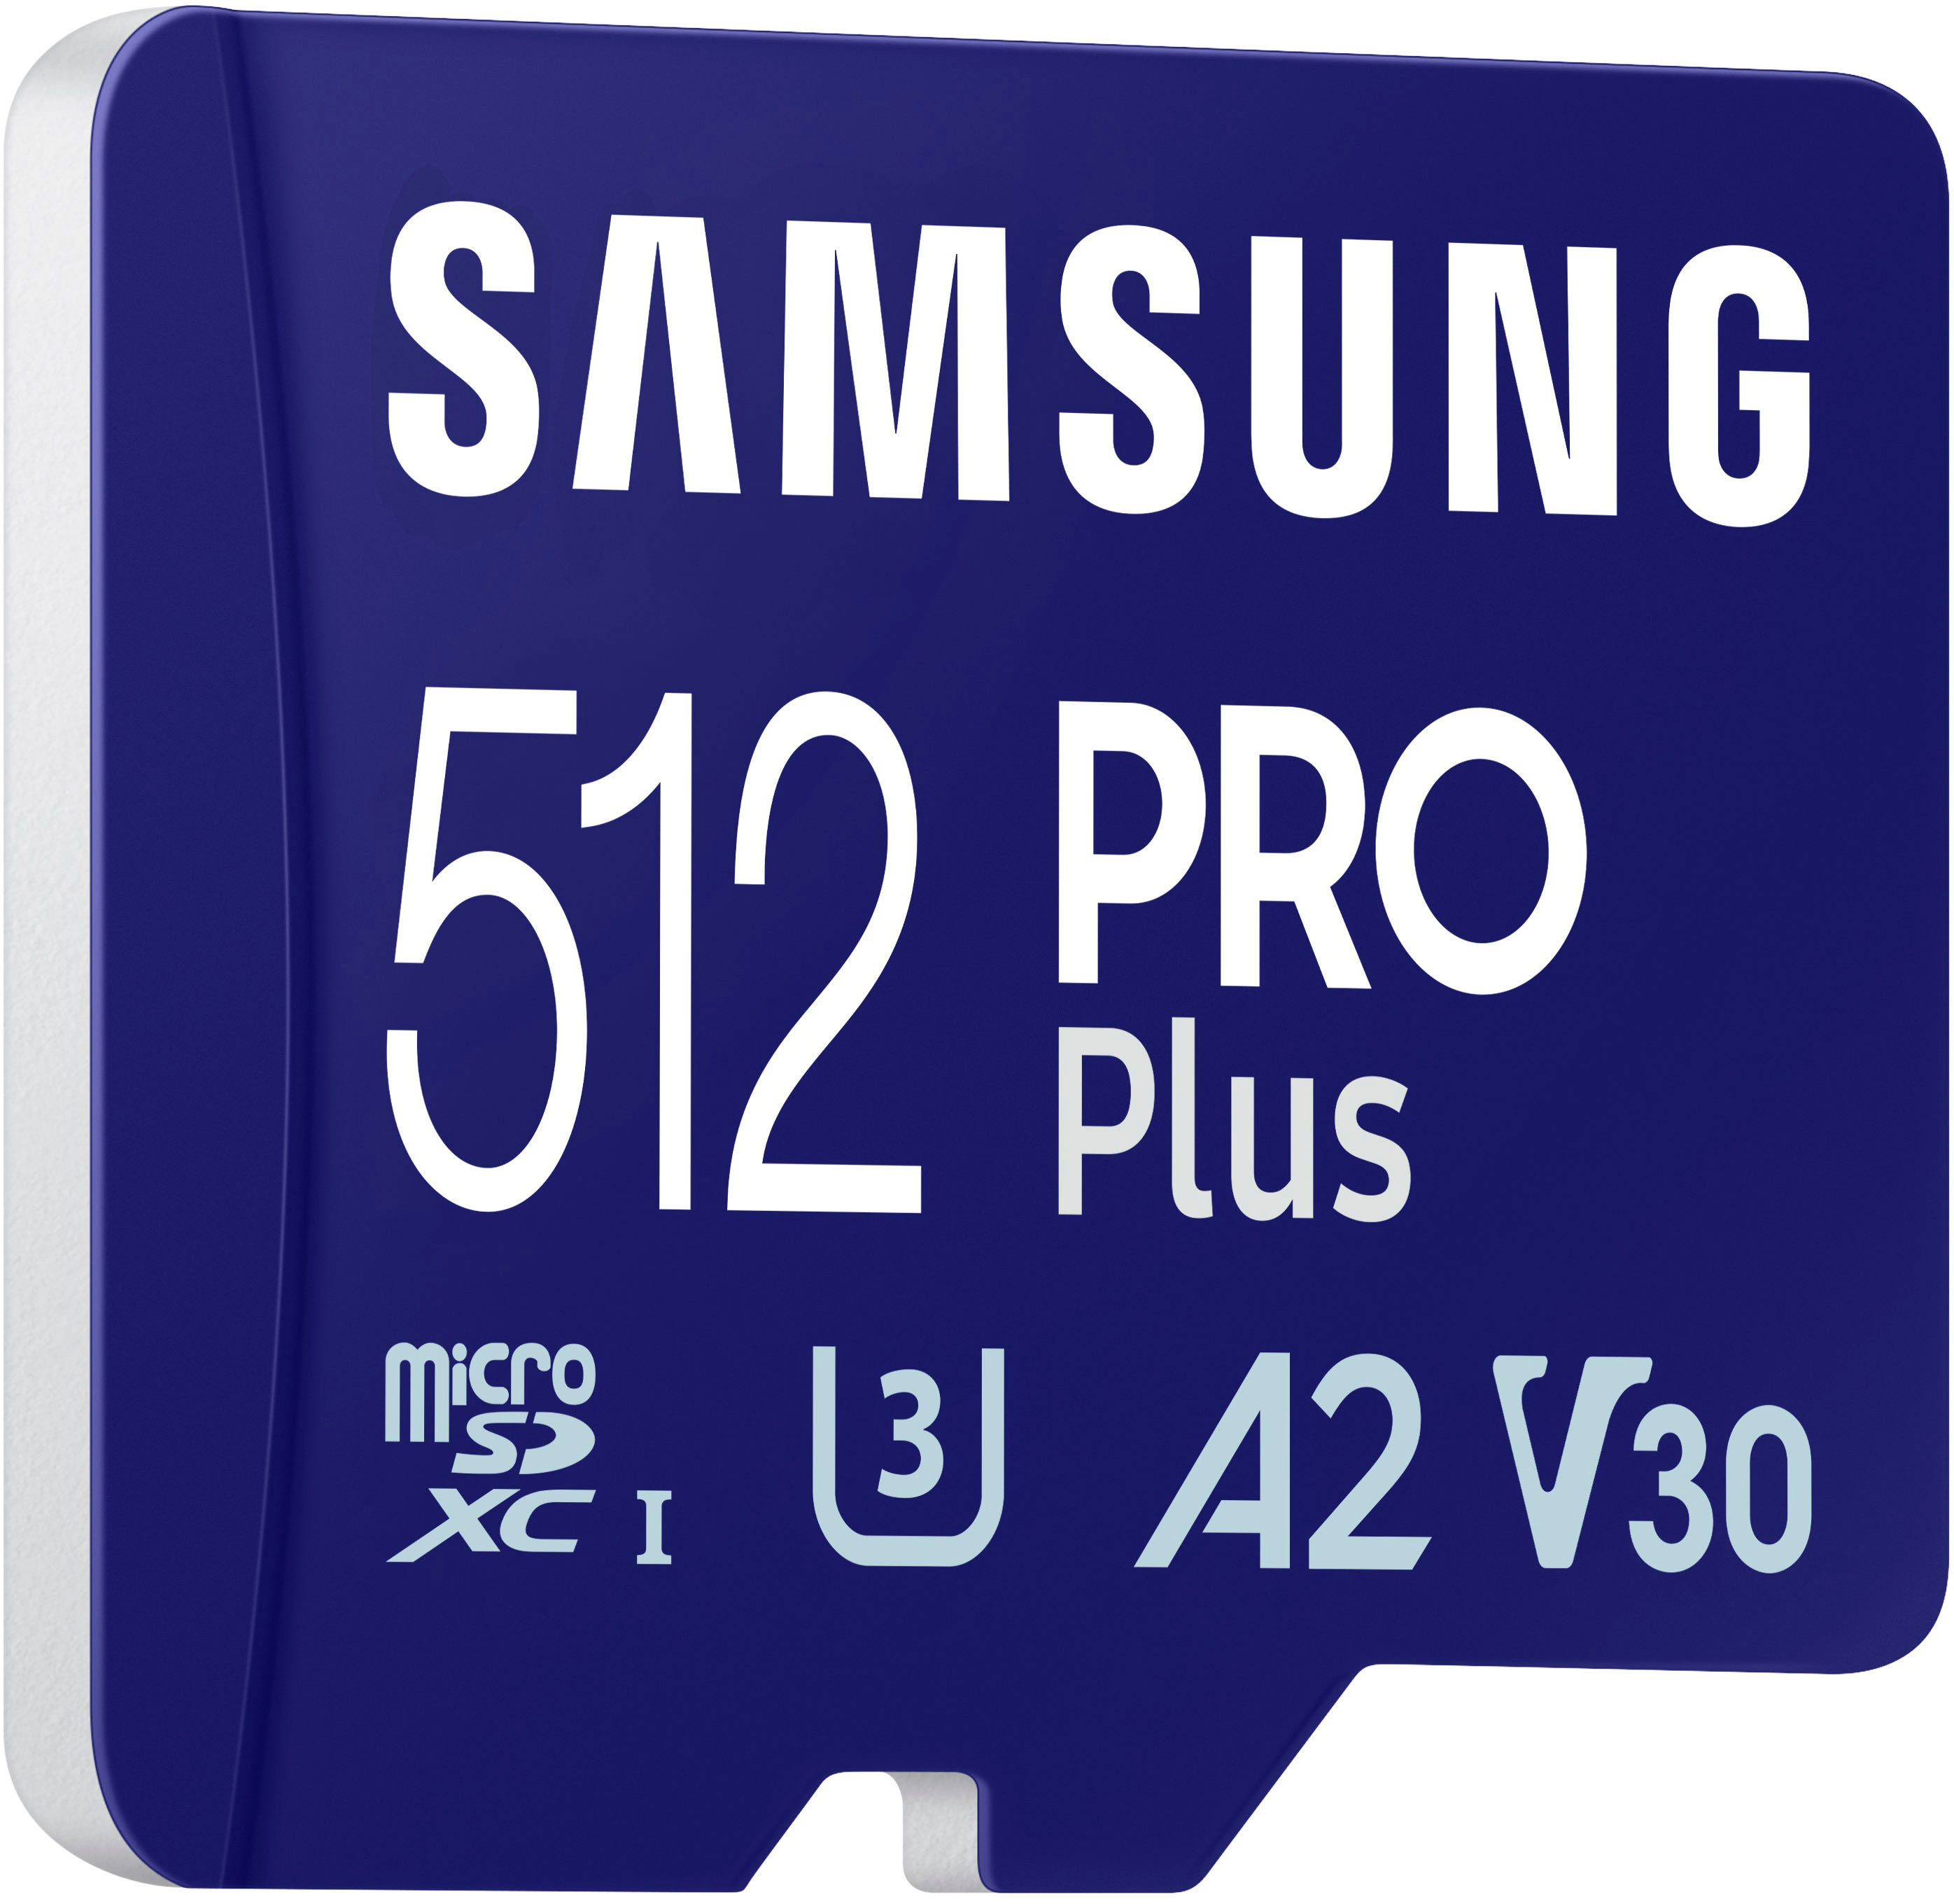 Samsung 512 GB EVO Plus microSDXC Class 10 / UHS-1 Flash Memory